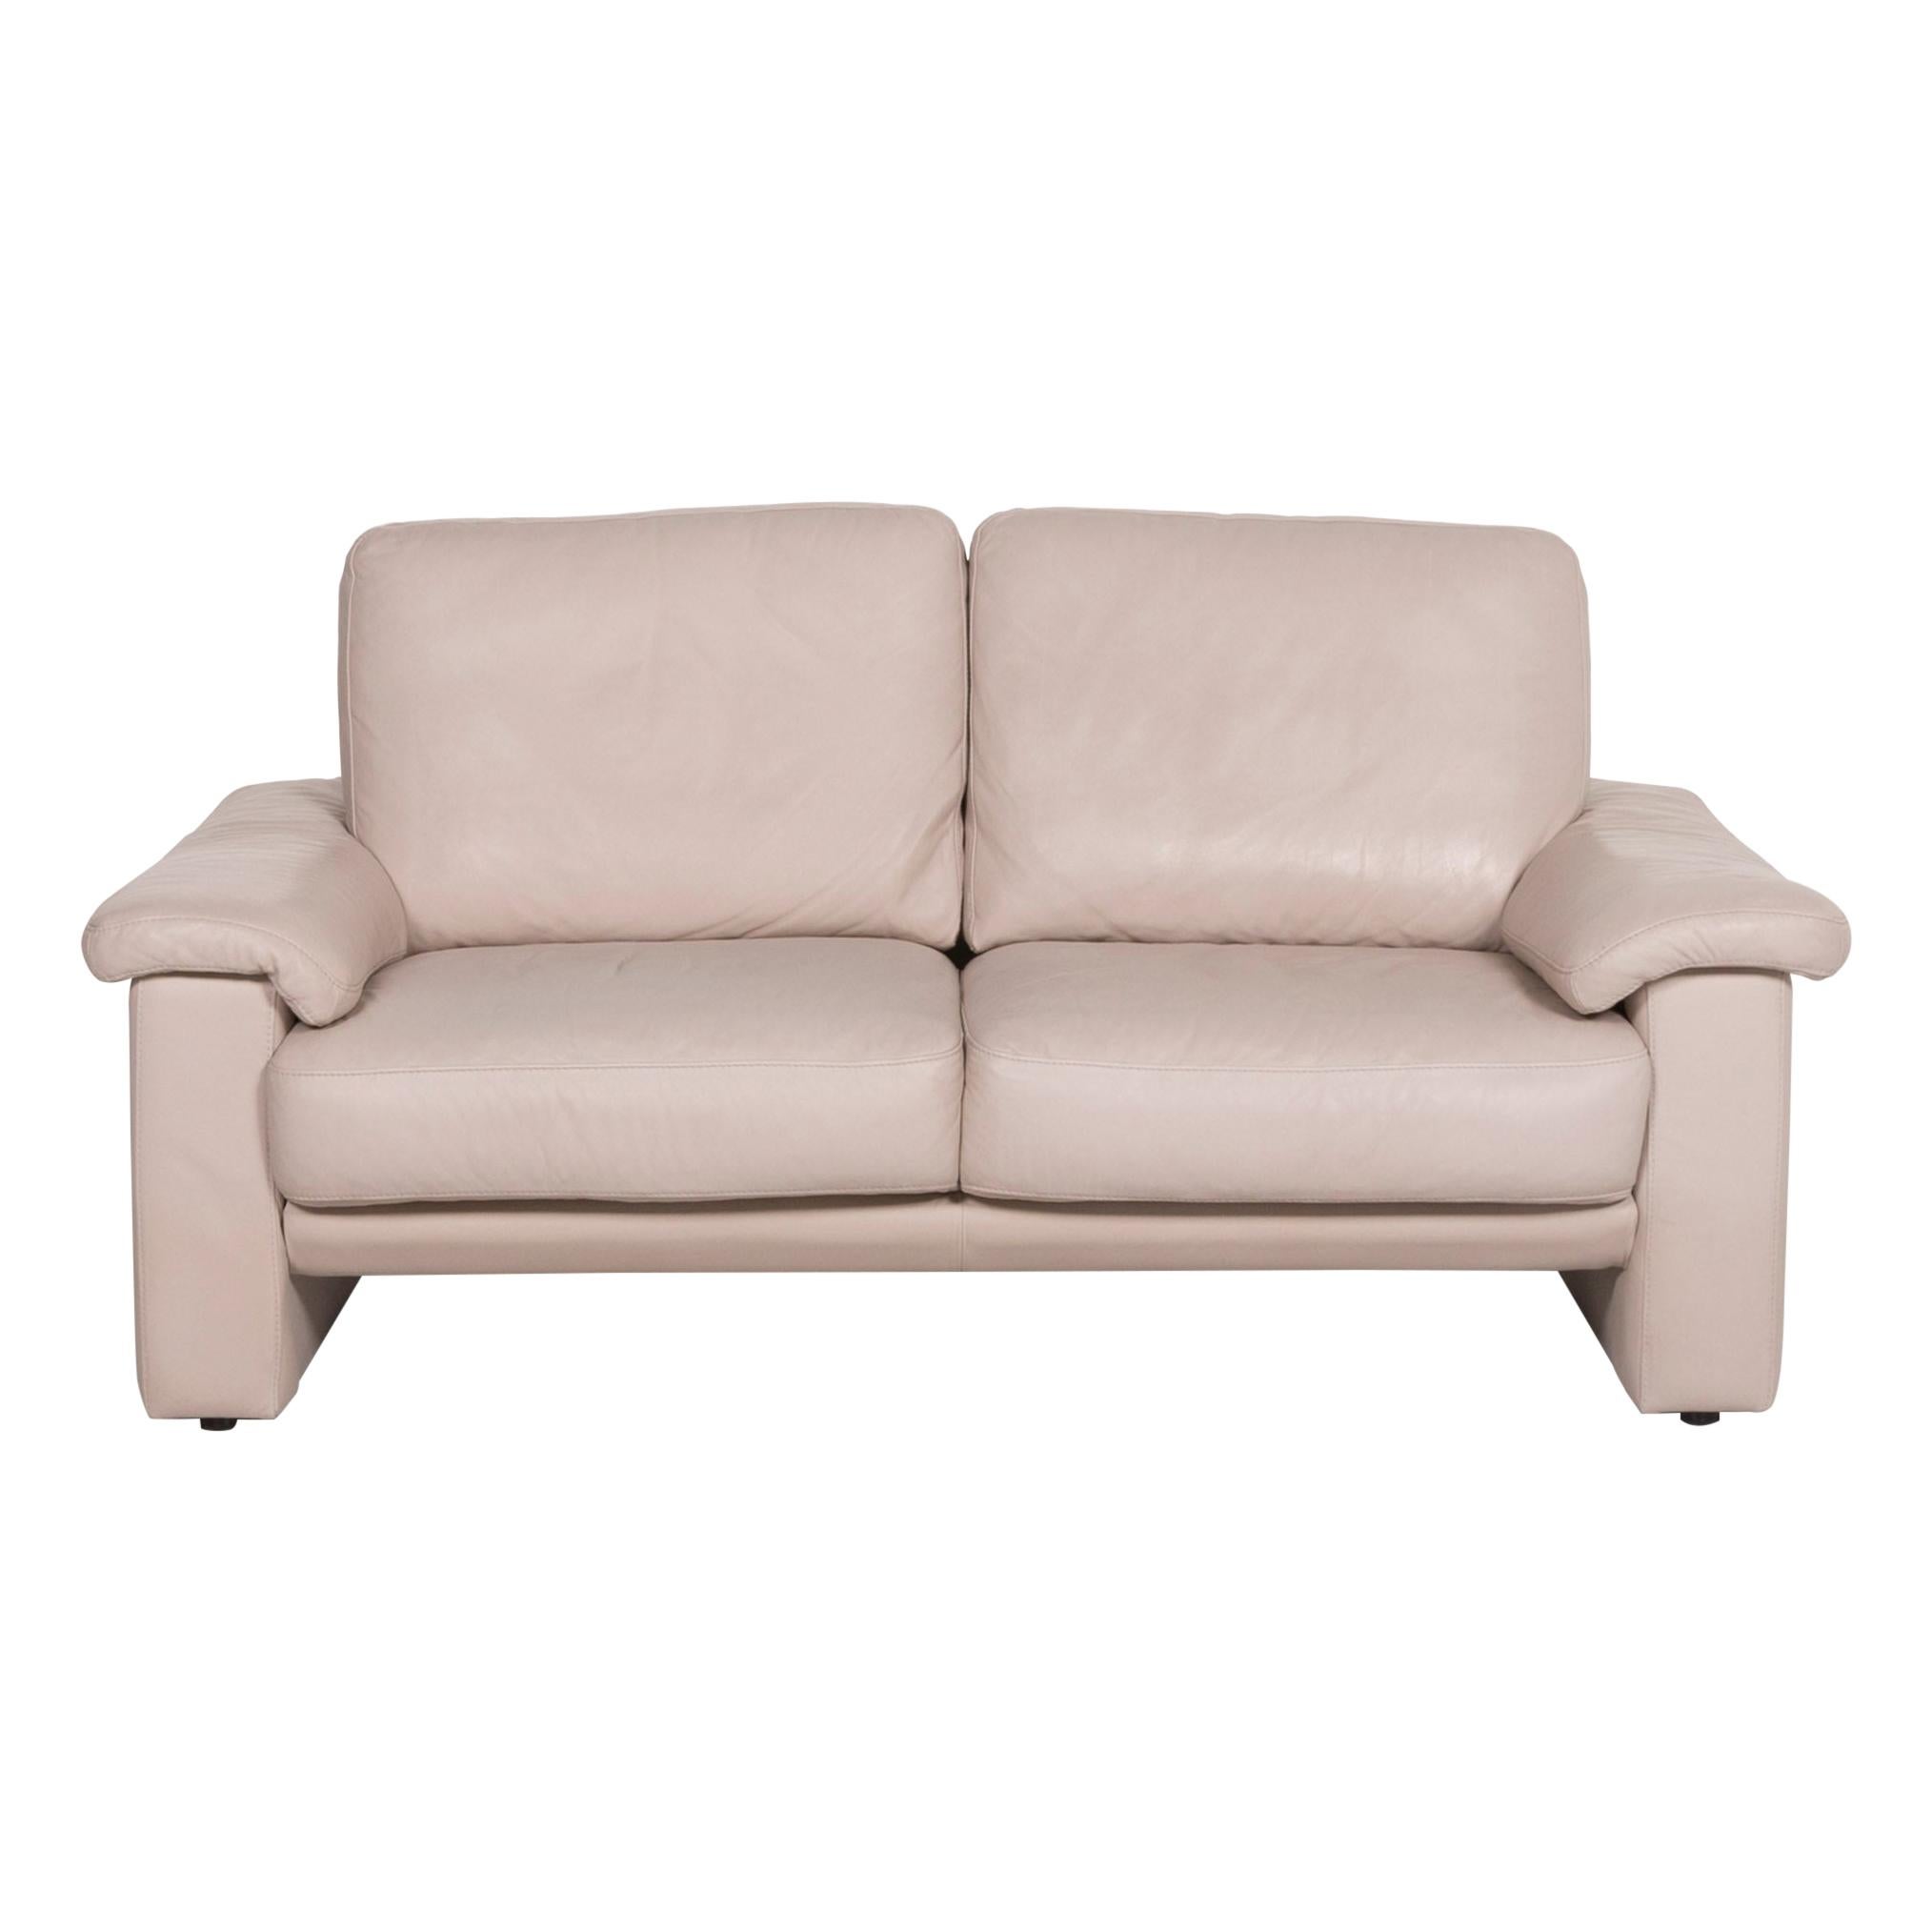 Willi Schillig Leather Sofa Cream Two-Seat Couch